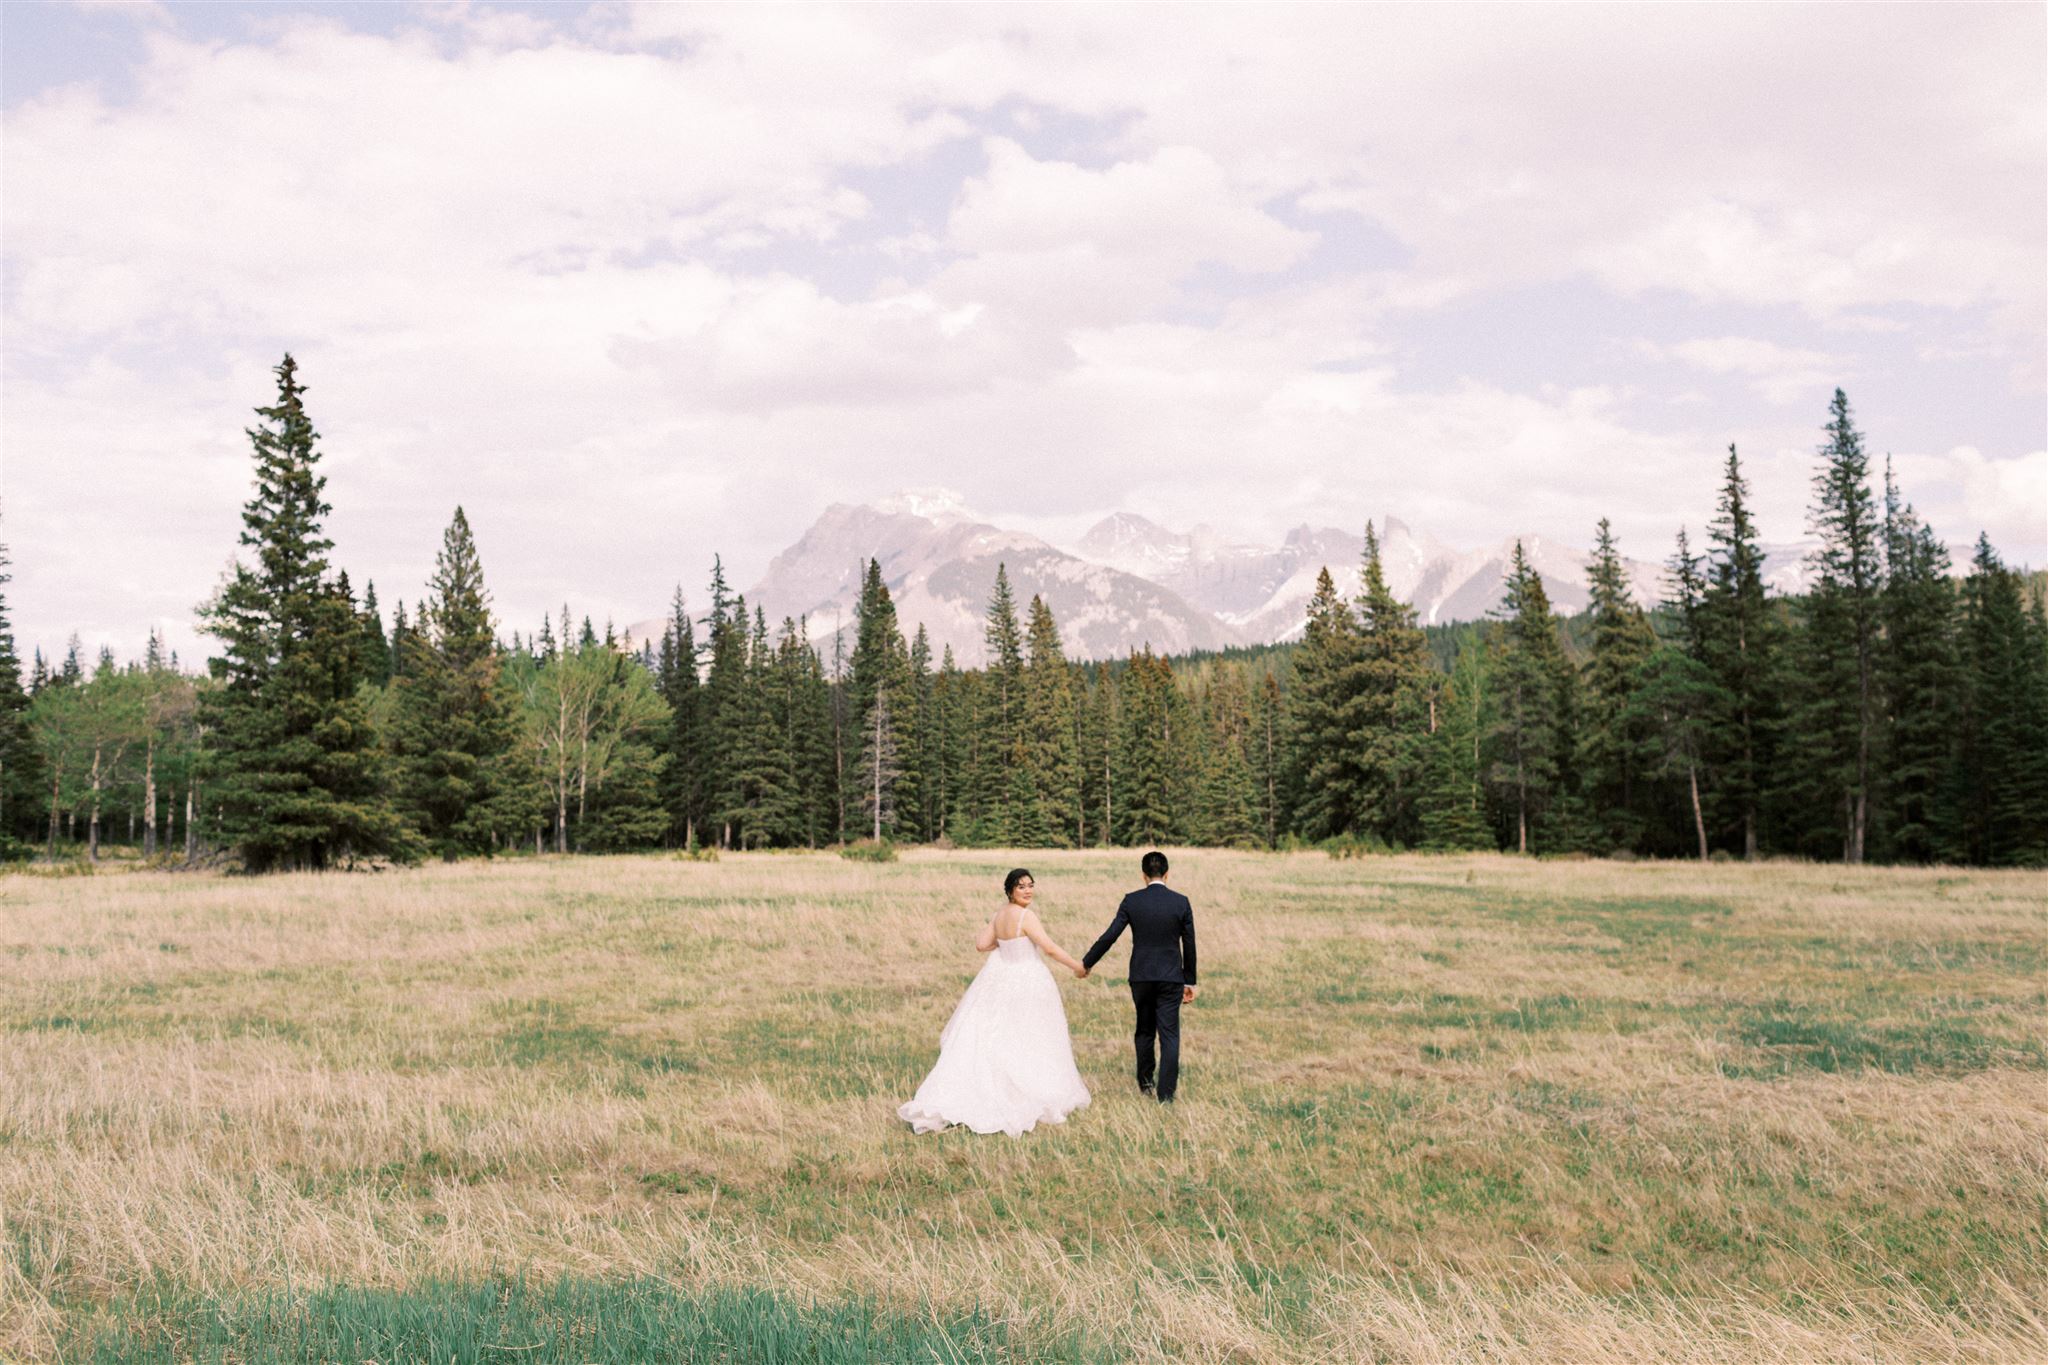 Banff Wedding Photographer, lake minnewanka elopement, banff elopement, mountain backdrop, mountain wedding photos, nicole sarah, banff national park, banff national park wedding